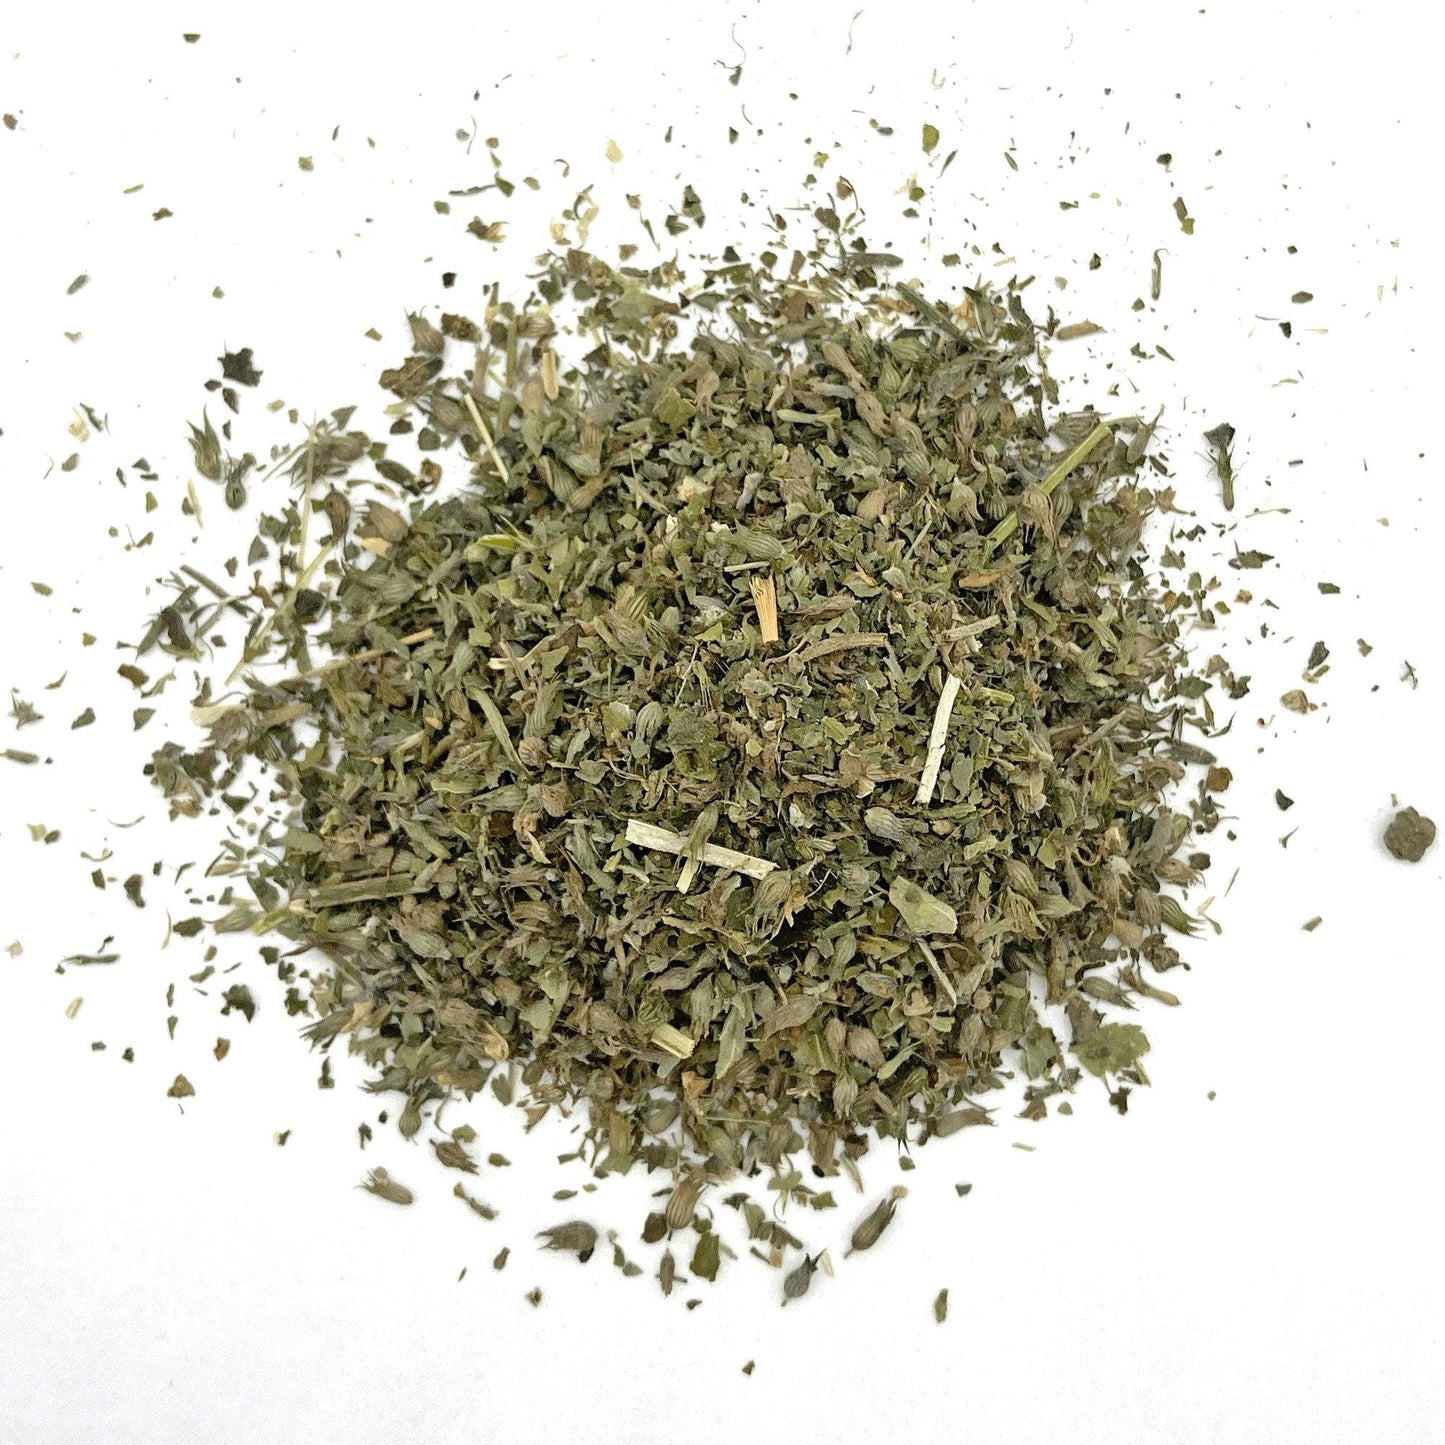 Garden Pawty - Catnip, Dill, Parsley & Valerian Root Blend - Meowijuana - A Catnip Company